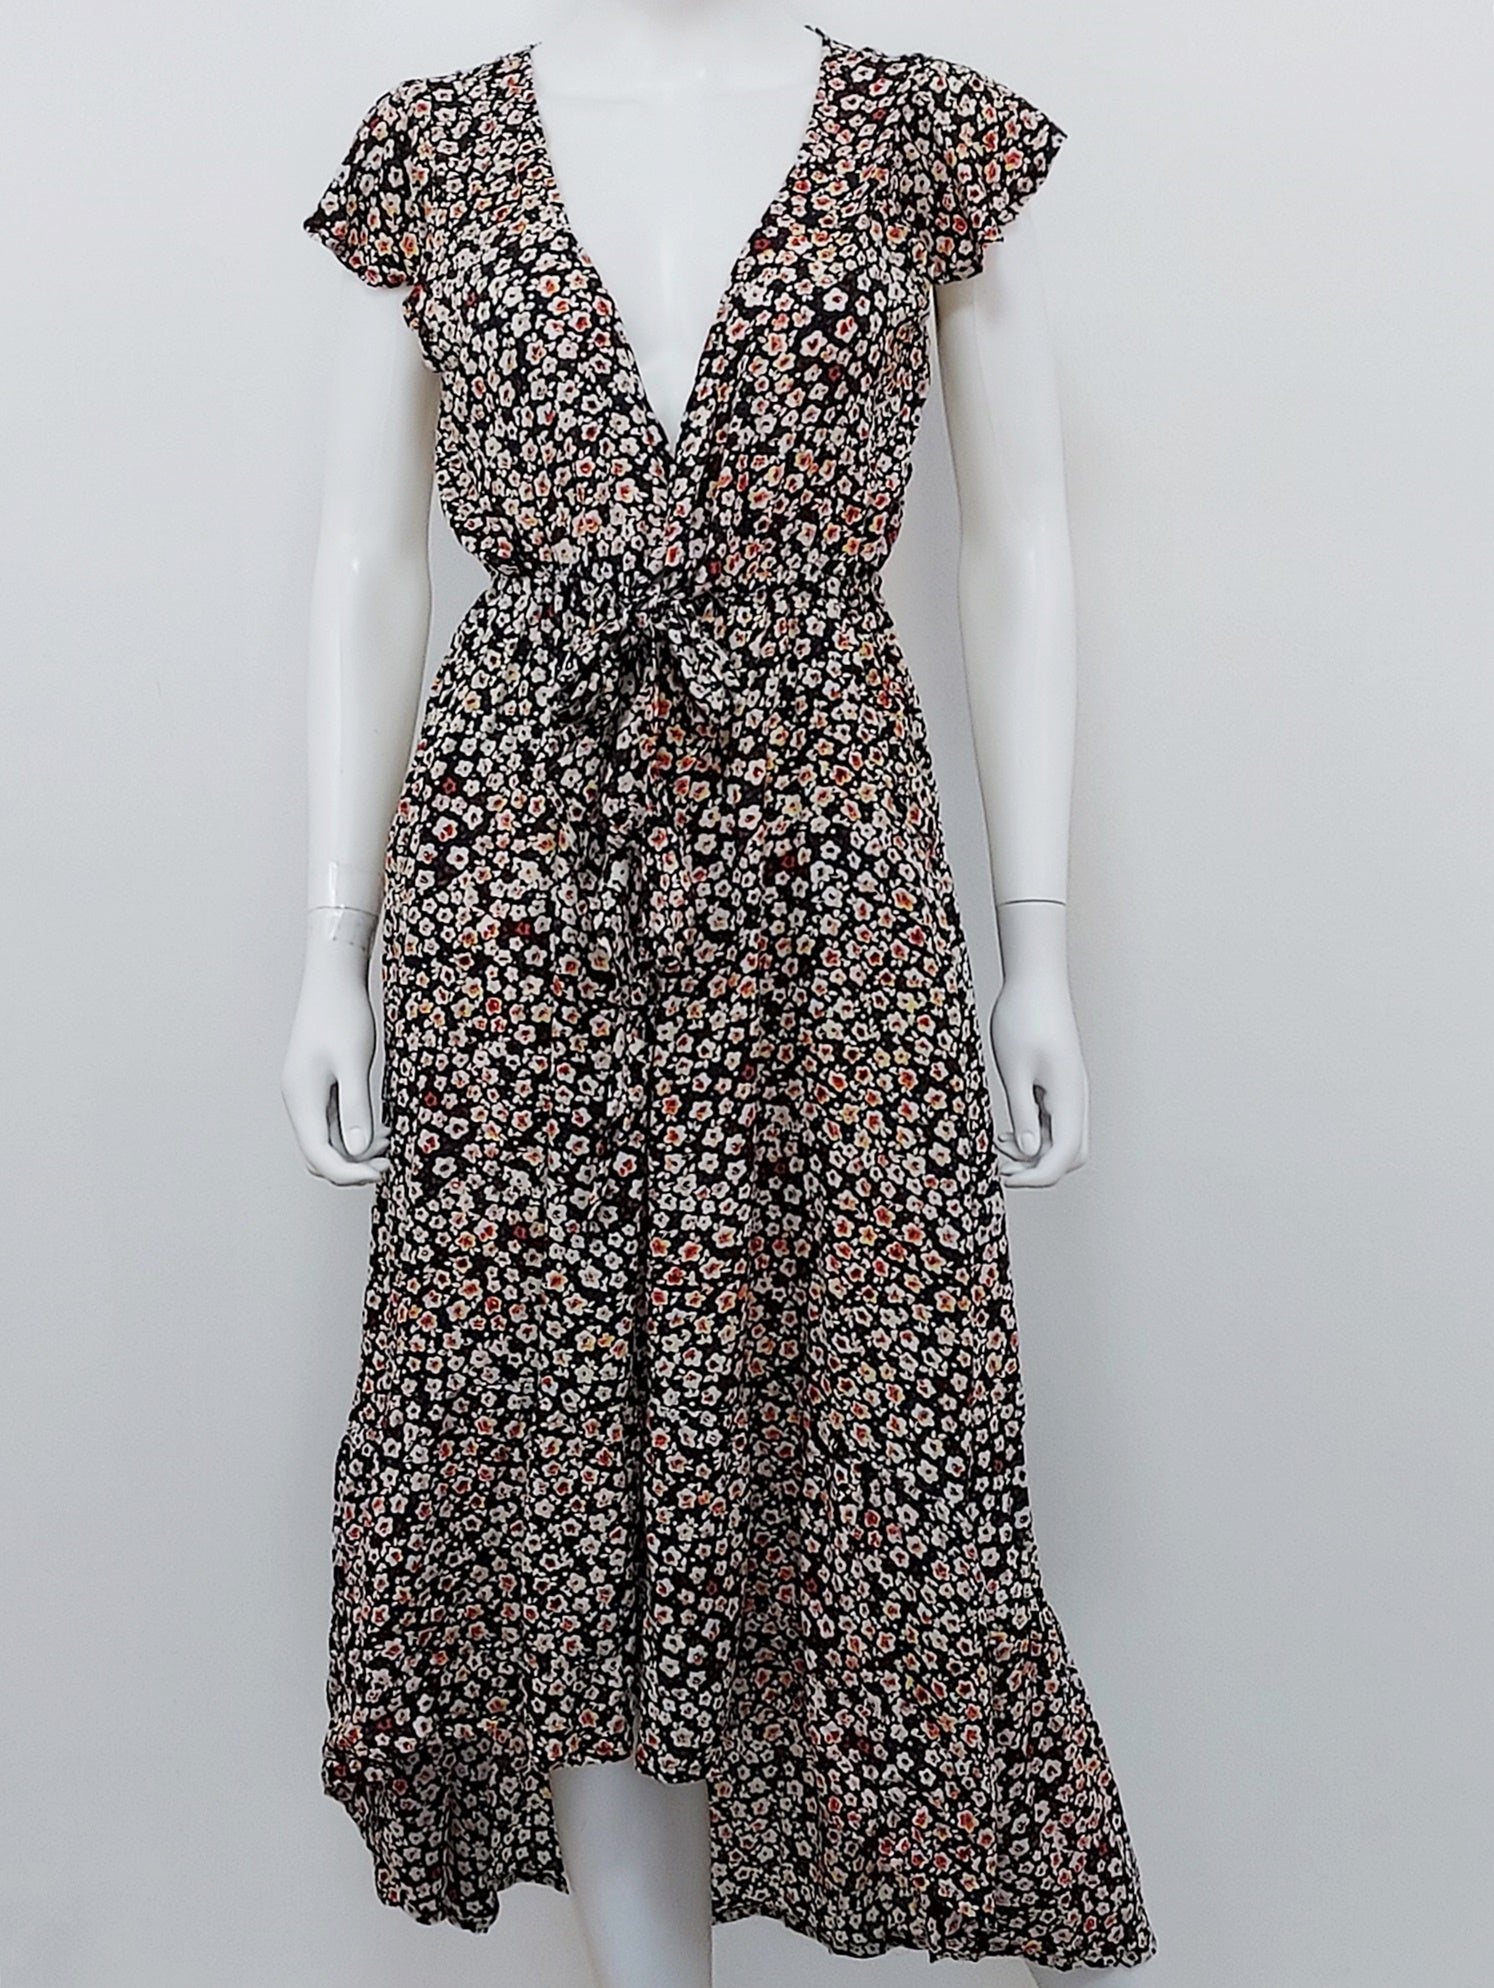 Blake Floral Maxi Dress Size Small/Medium